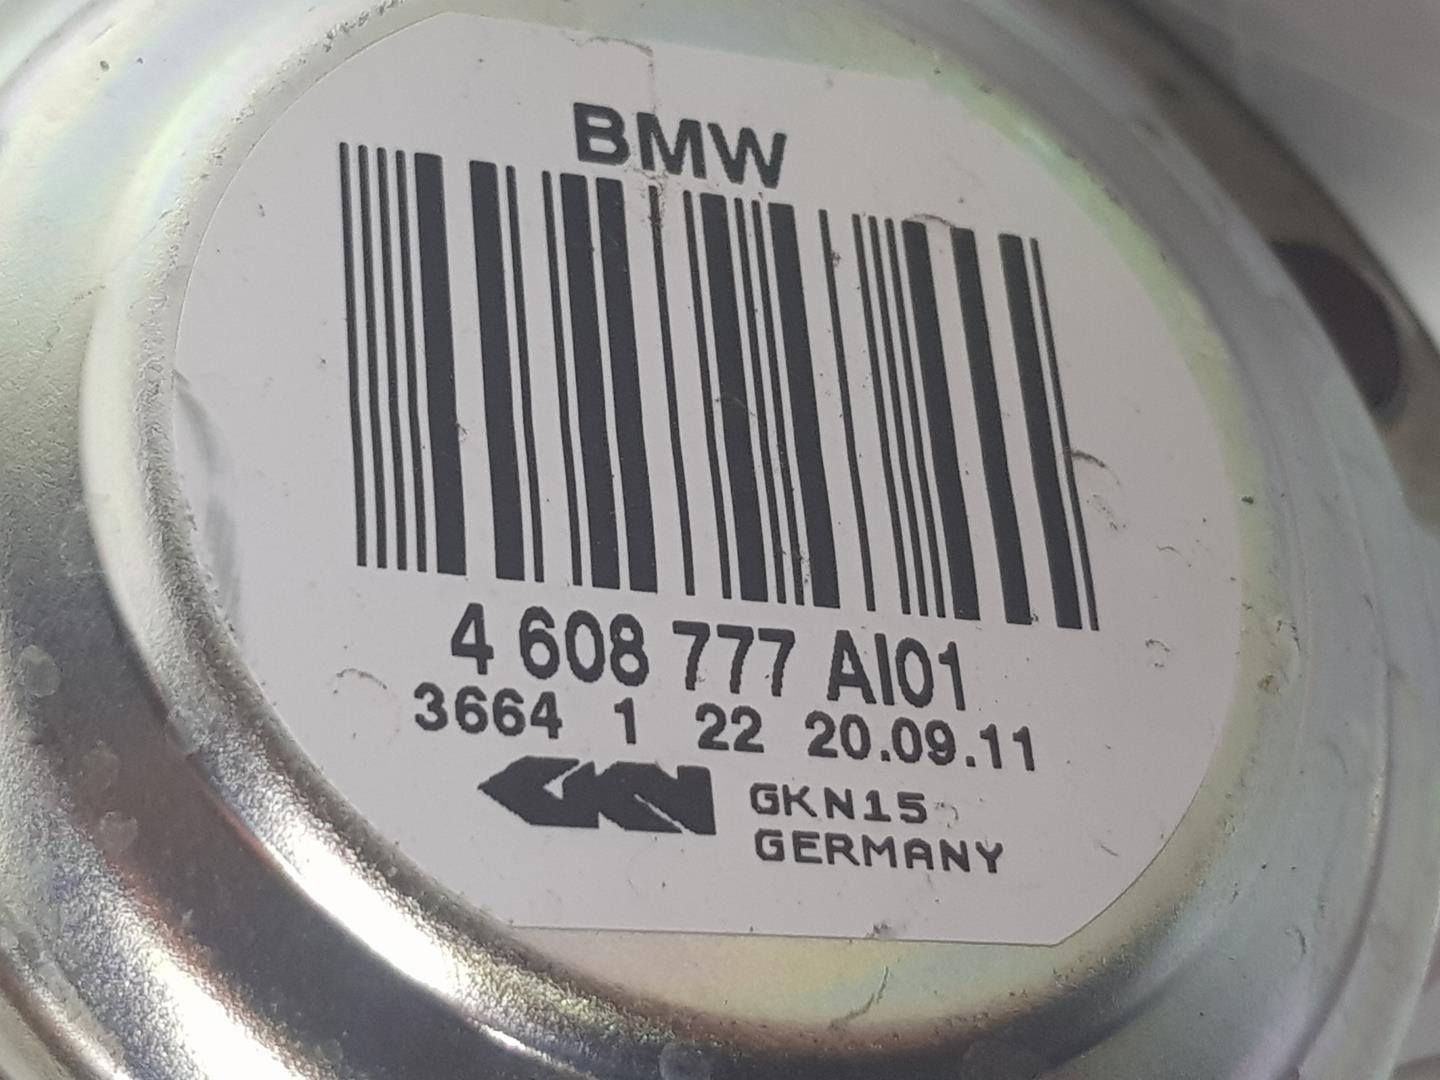 BMW X1 E84 (2009-2015) Rear Left Driveshaft 4608777, 33207605485 23894532